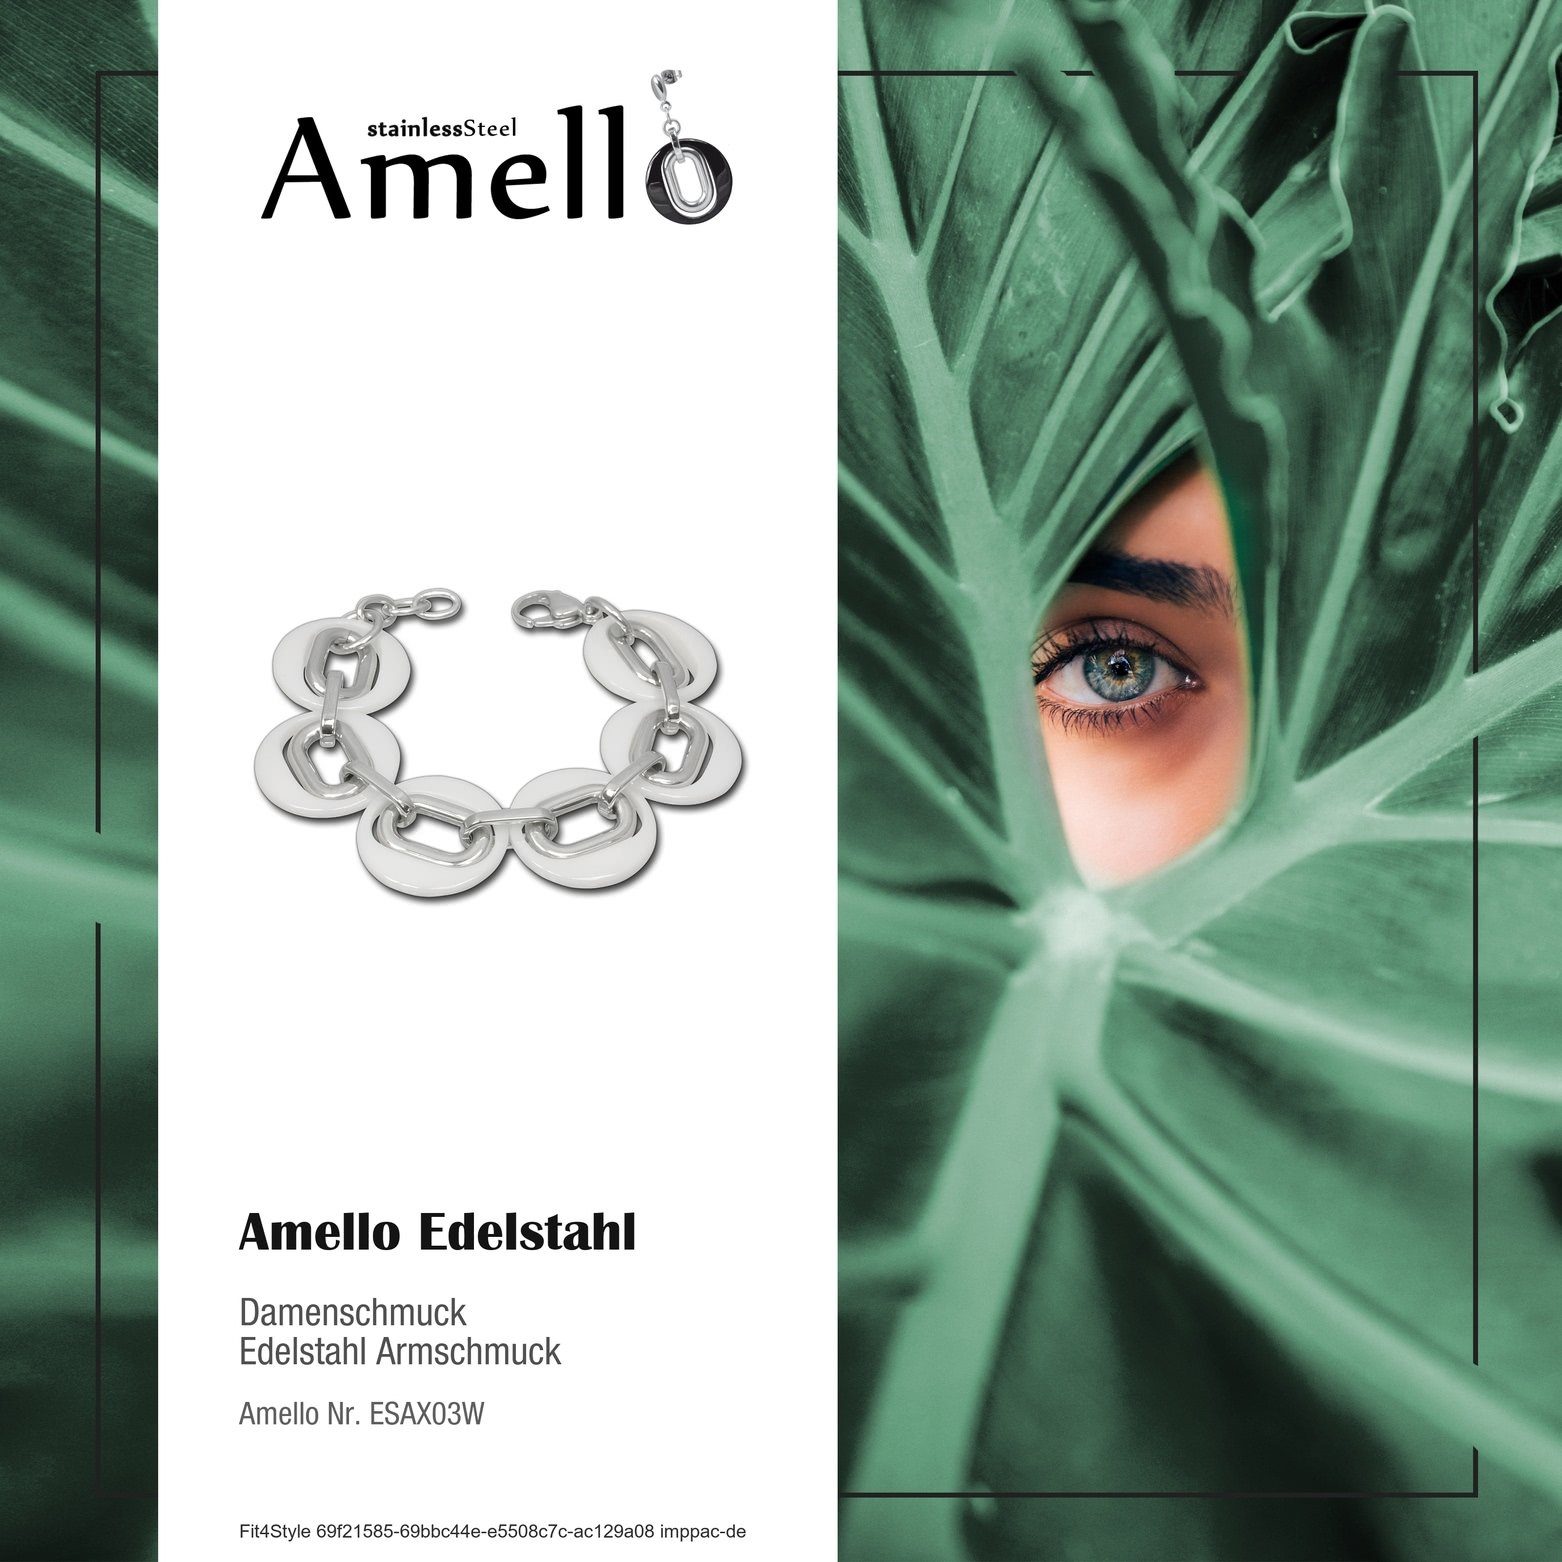 Edelstahlarmband Armband Damen Steel) (Armband), Amello Armbänder Magic silber weiß Amello (Stainless Edelstahl für